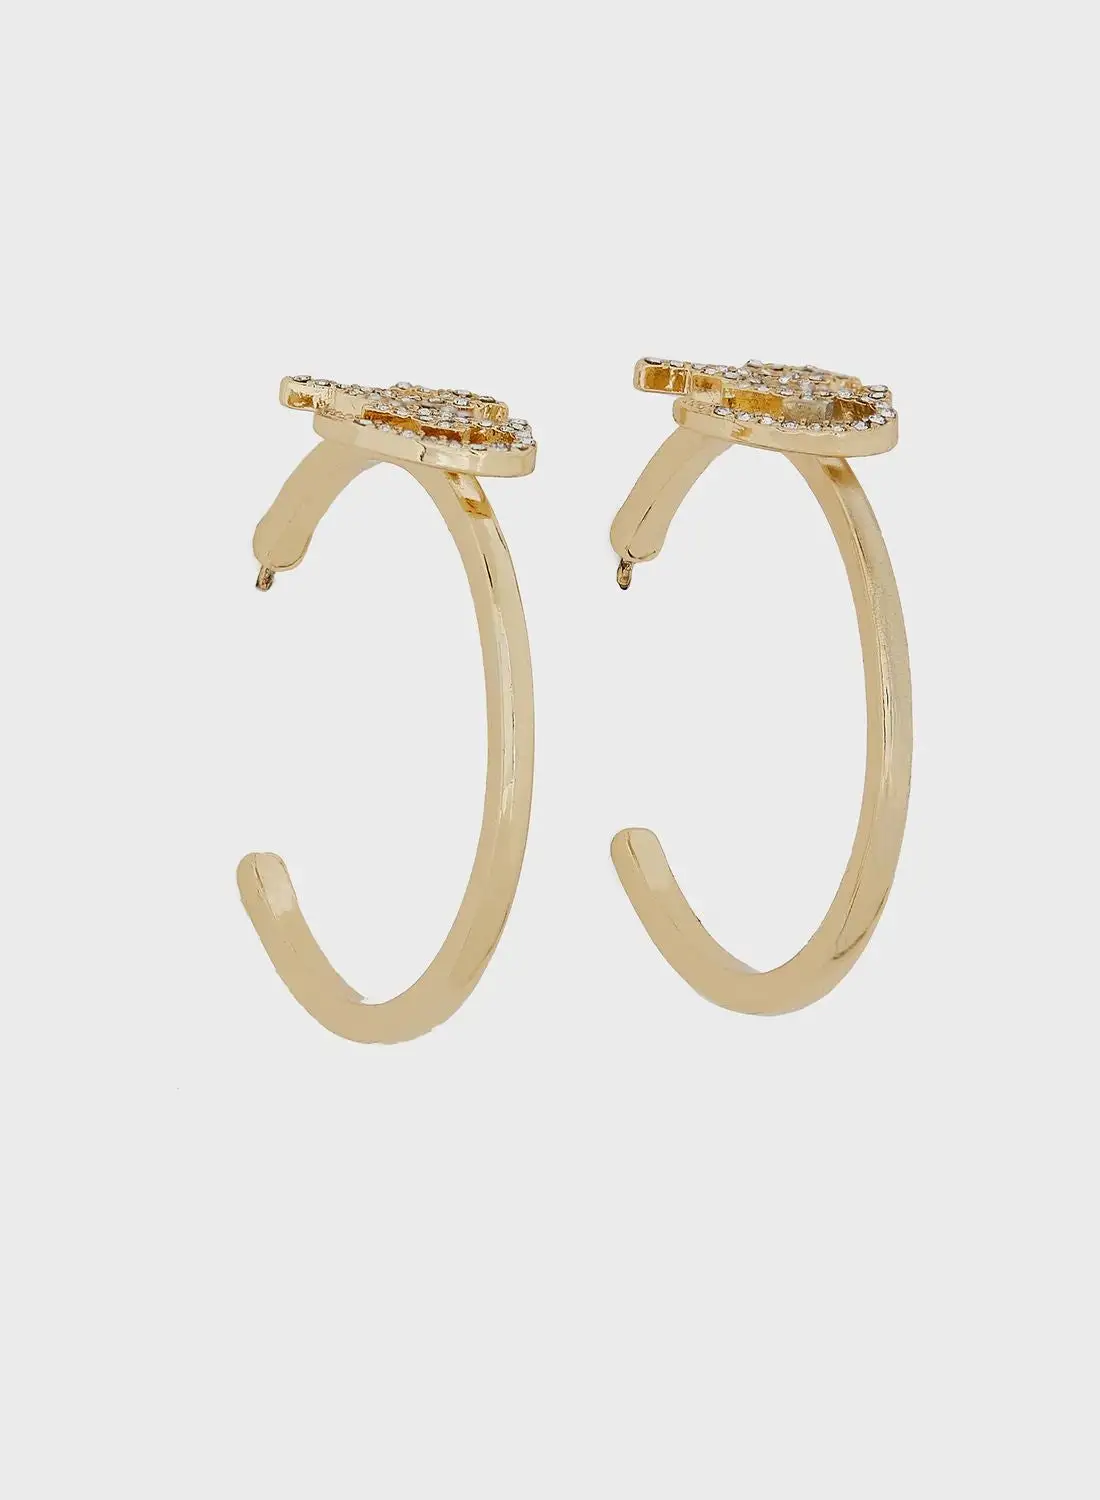 Khizana Ya Ein'-Diamante Earrings